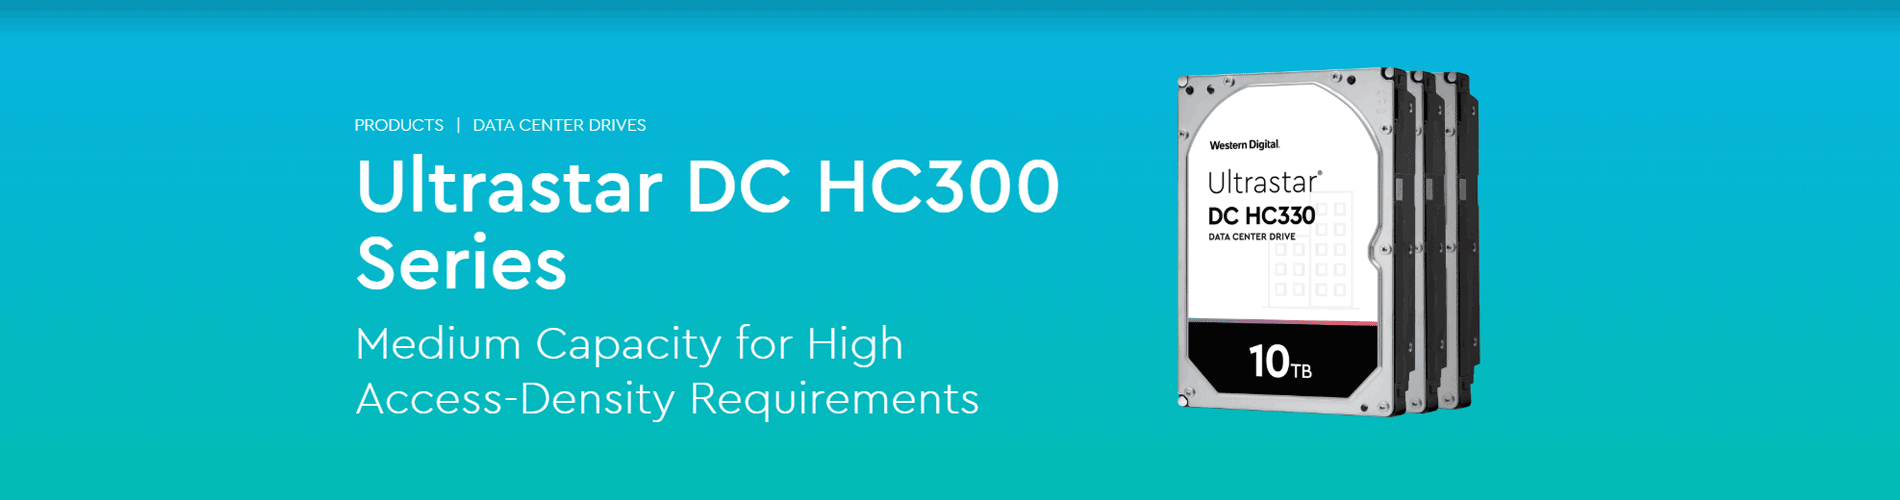 Ultrastar DC HC300 Series